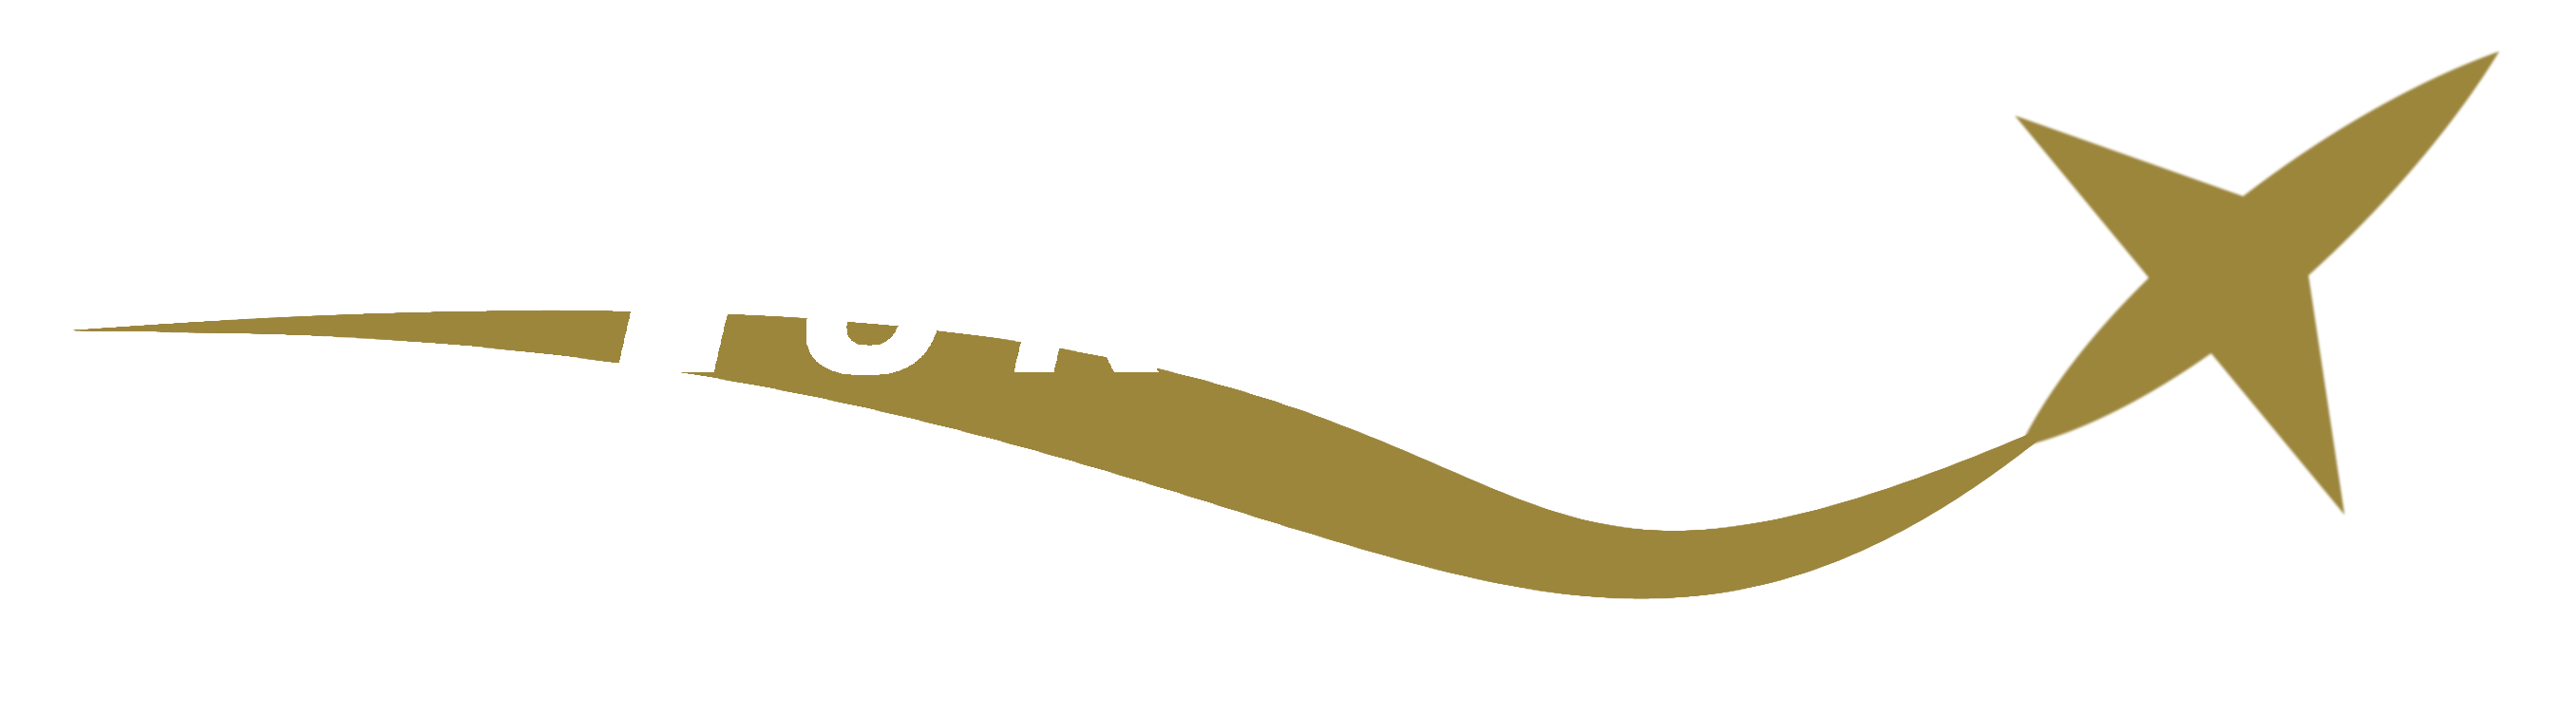 Falcon Furious Display Team